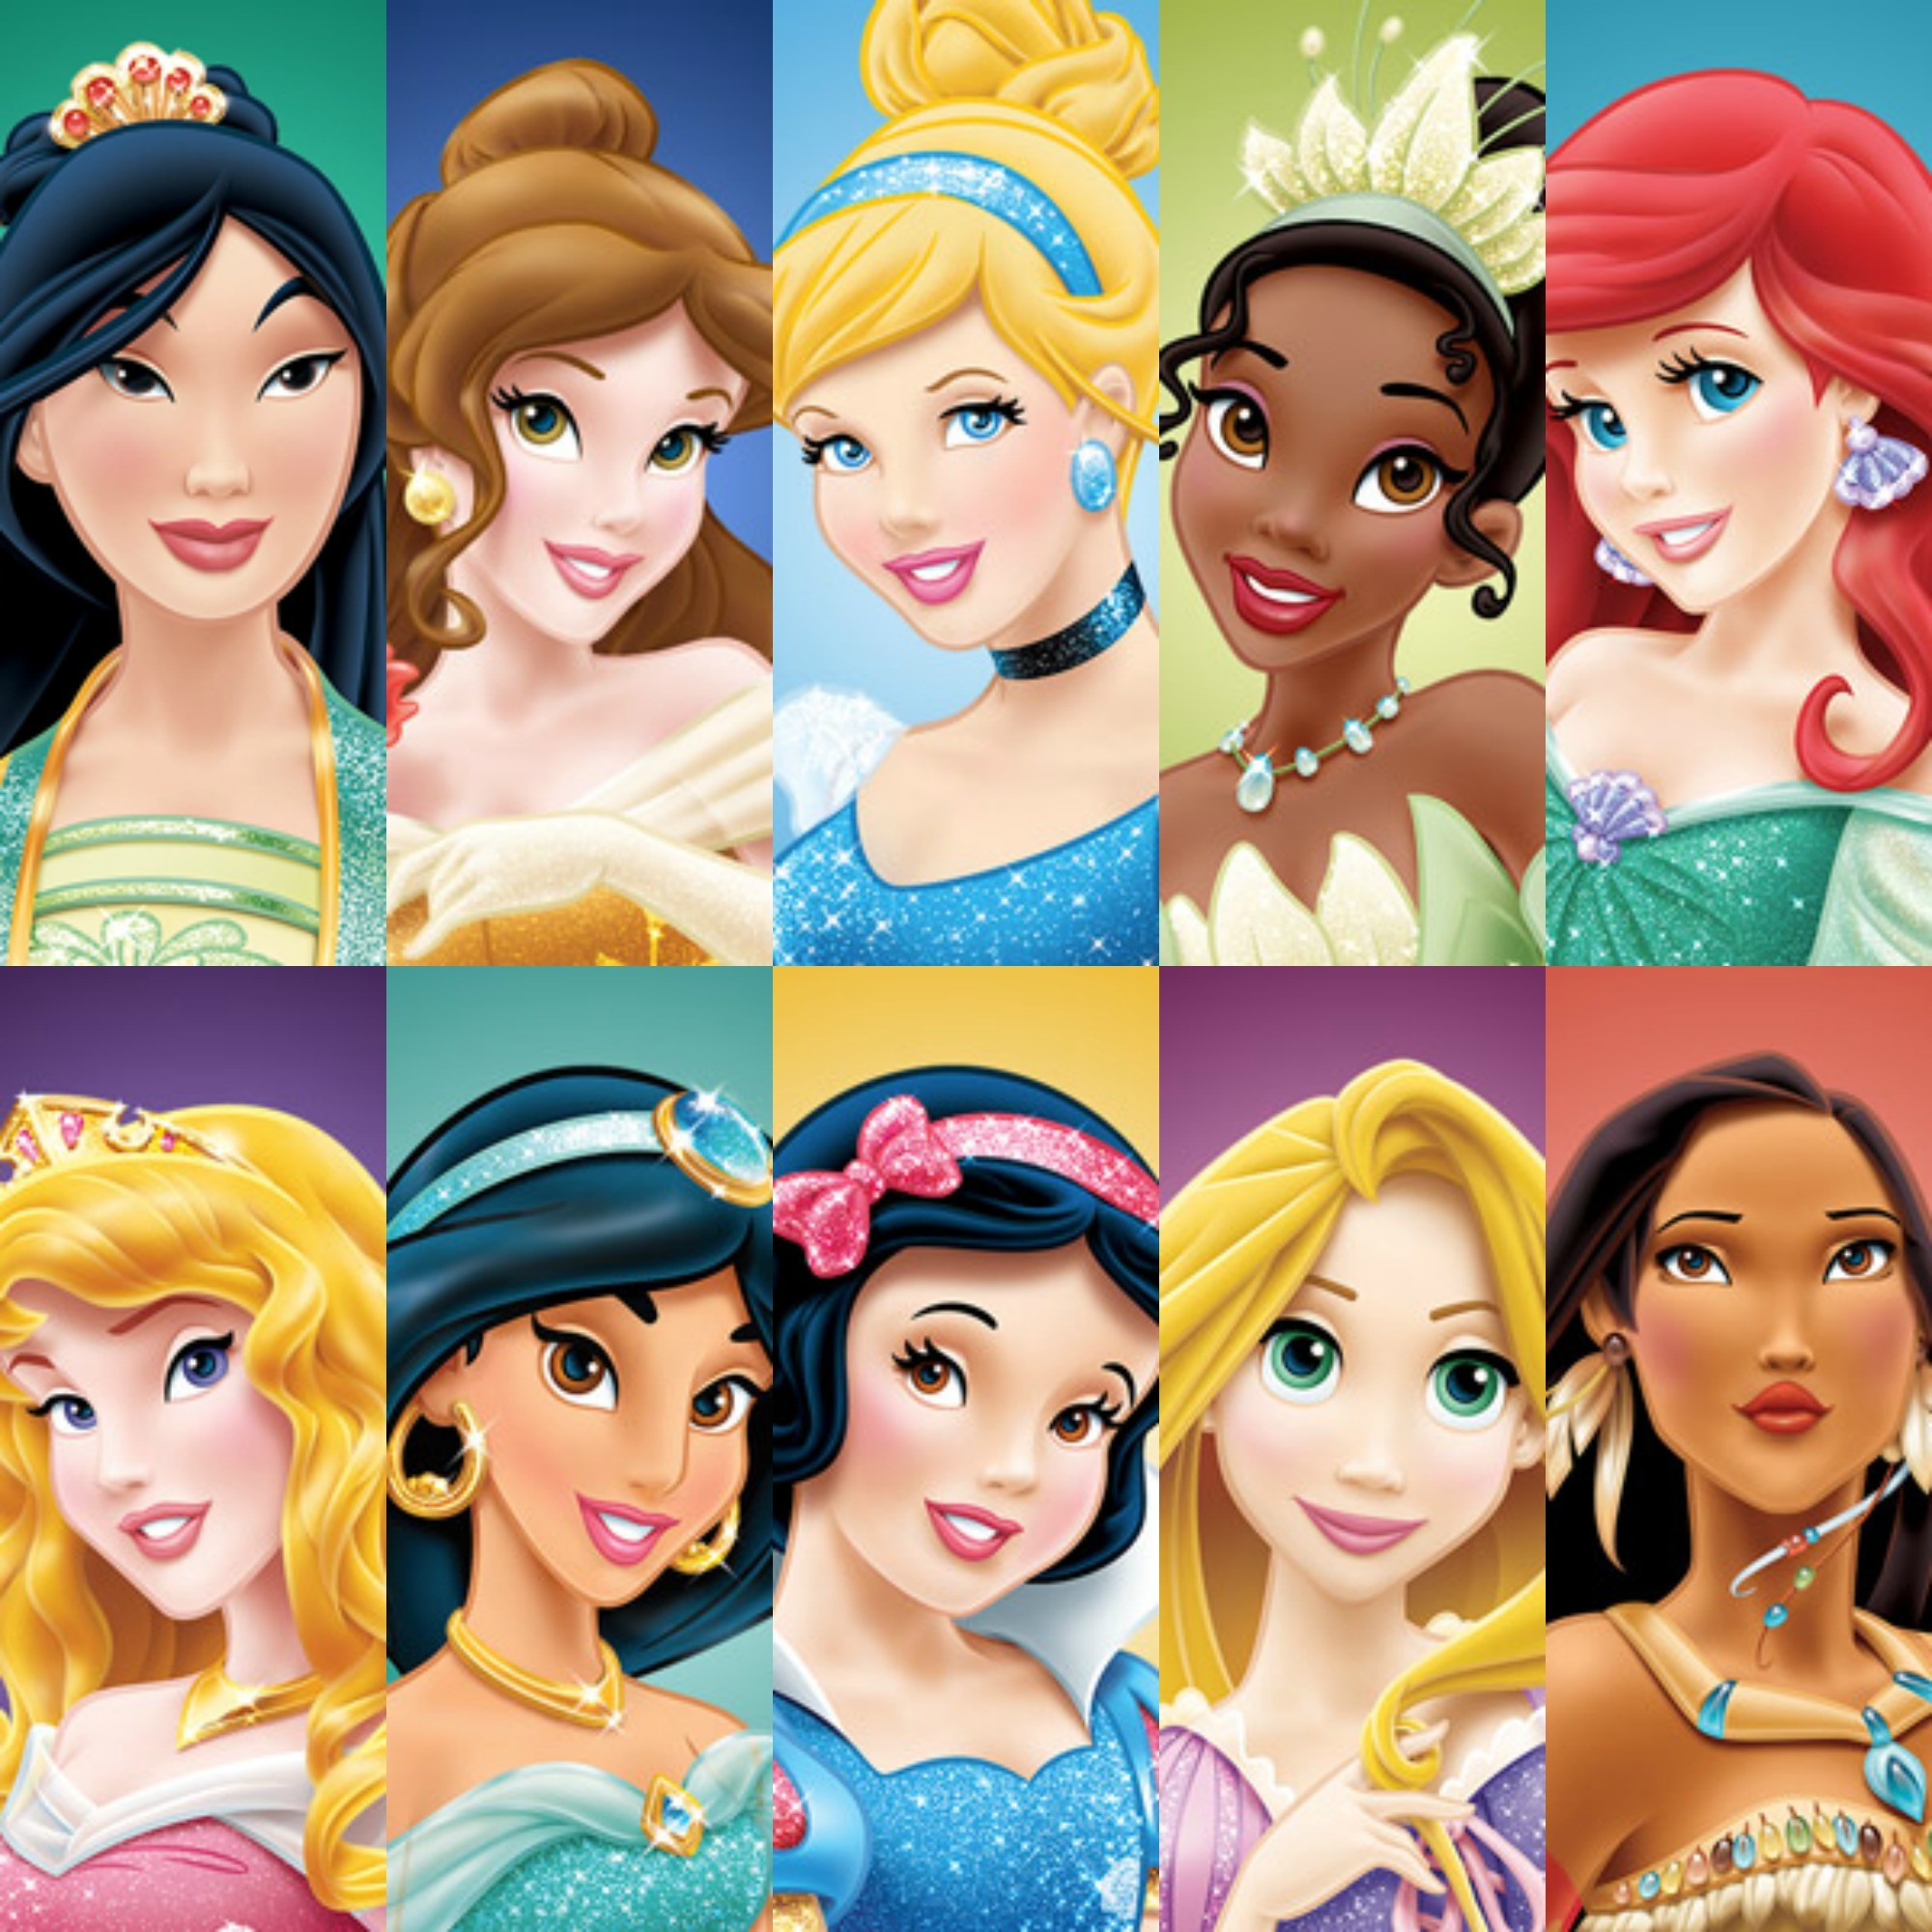 Disney Princesses Wallpaper Images